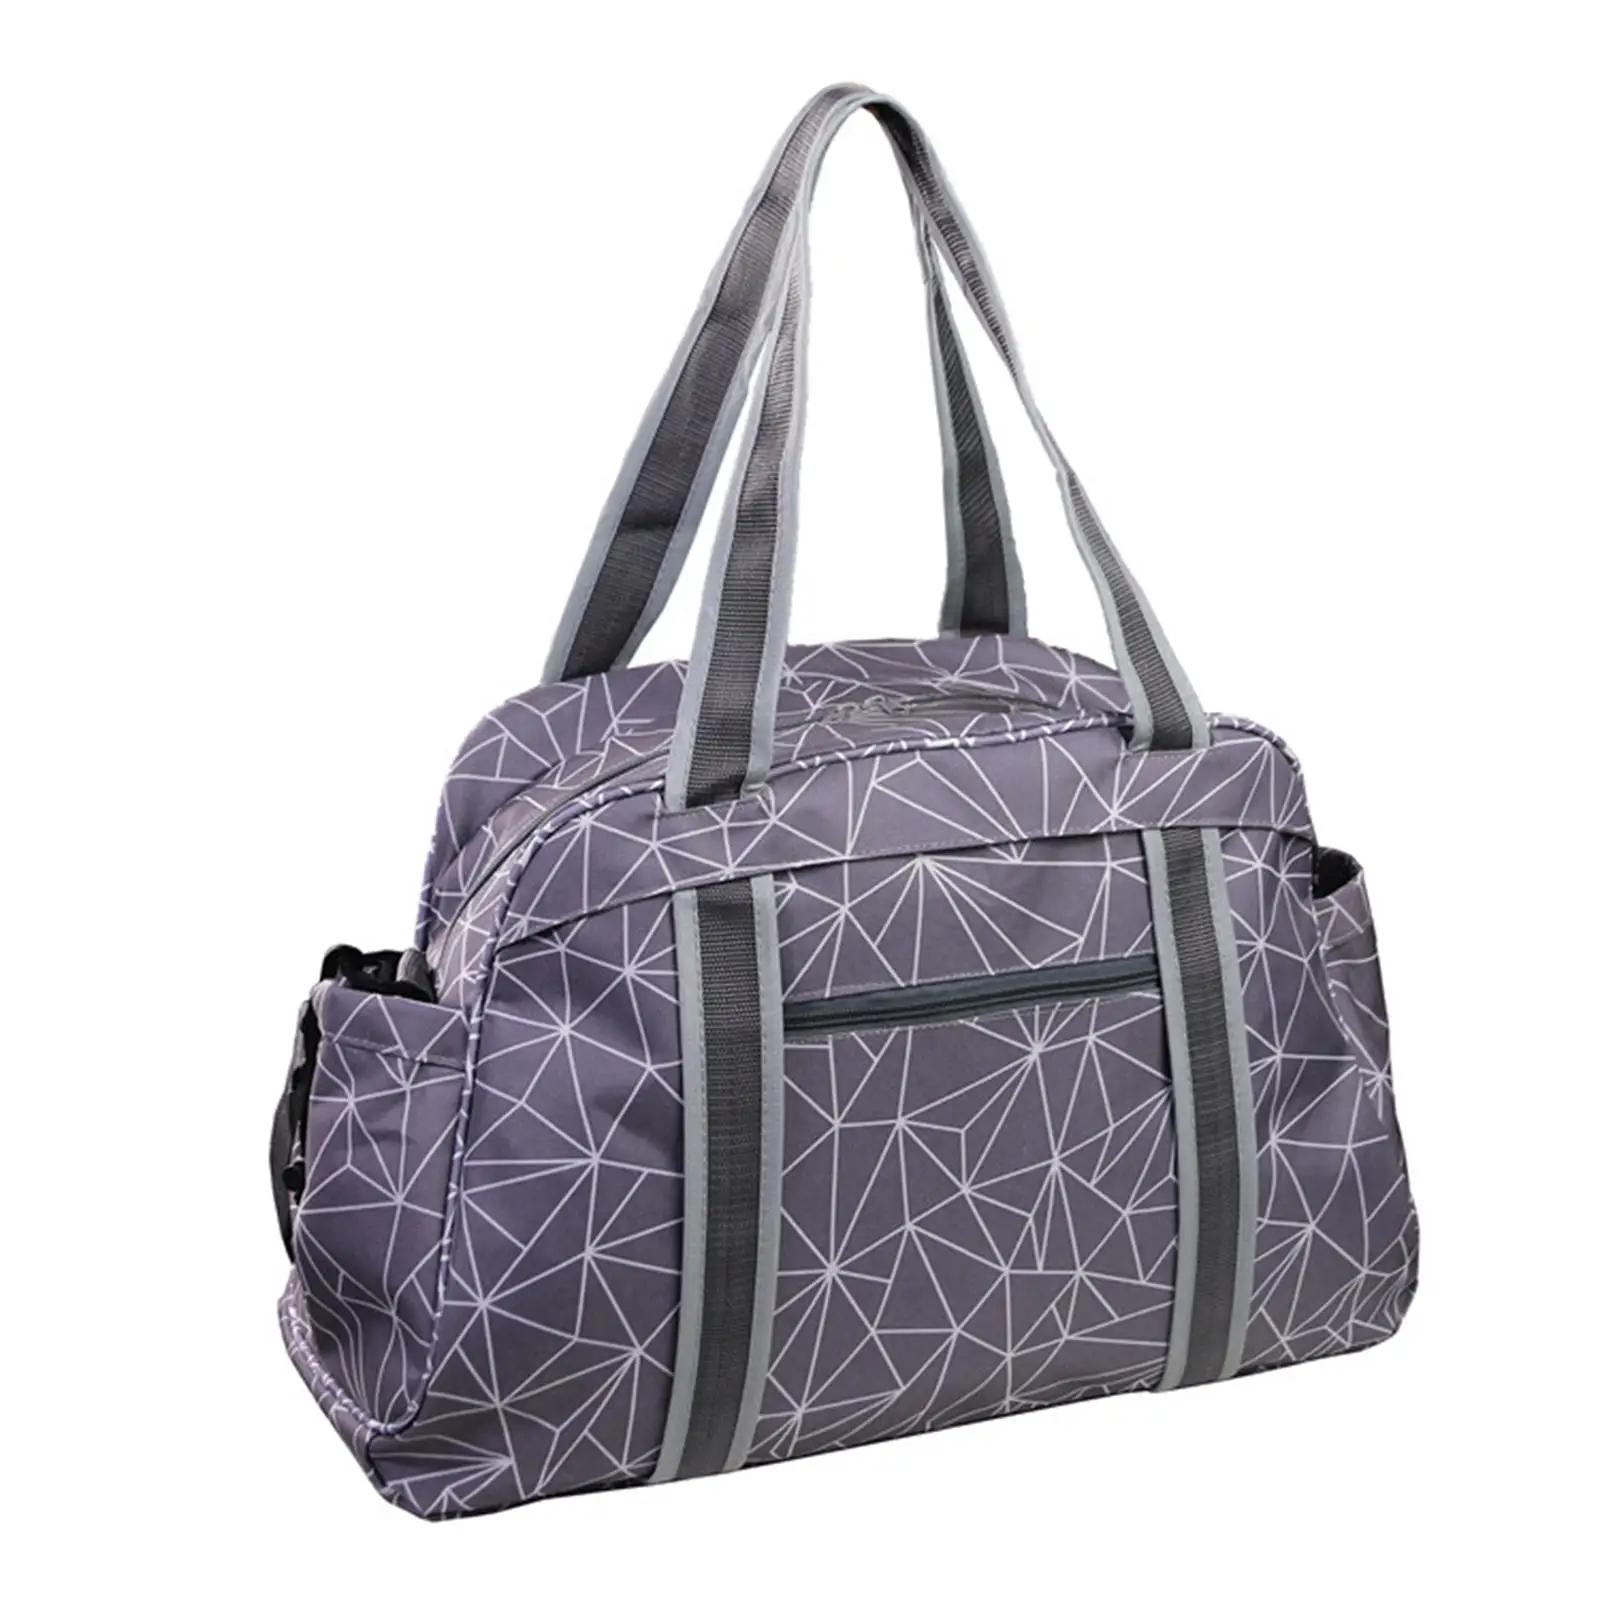 Sports Gym Bags Wear Resistant Weekender Bag Organizer Storage Tote Holdall Travel Duffle Bag for Golf Apparel Women Men